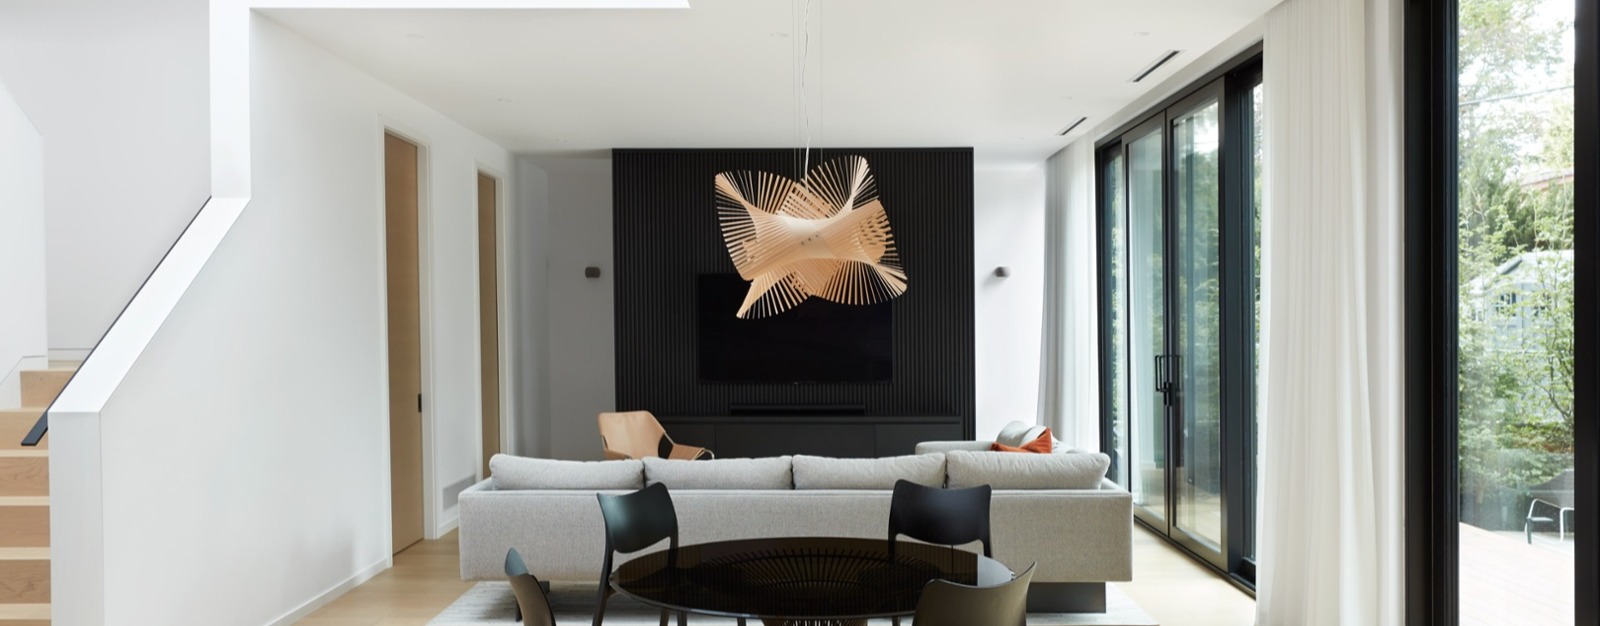 minimal modern living room with circular pendant lighting-2-1